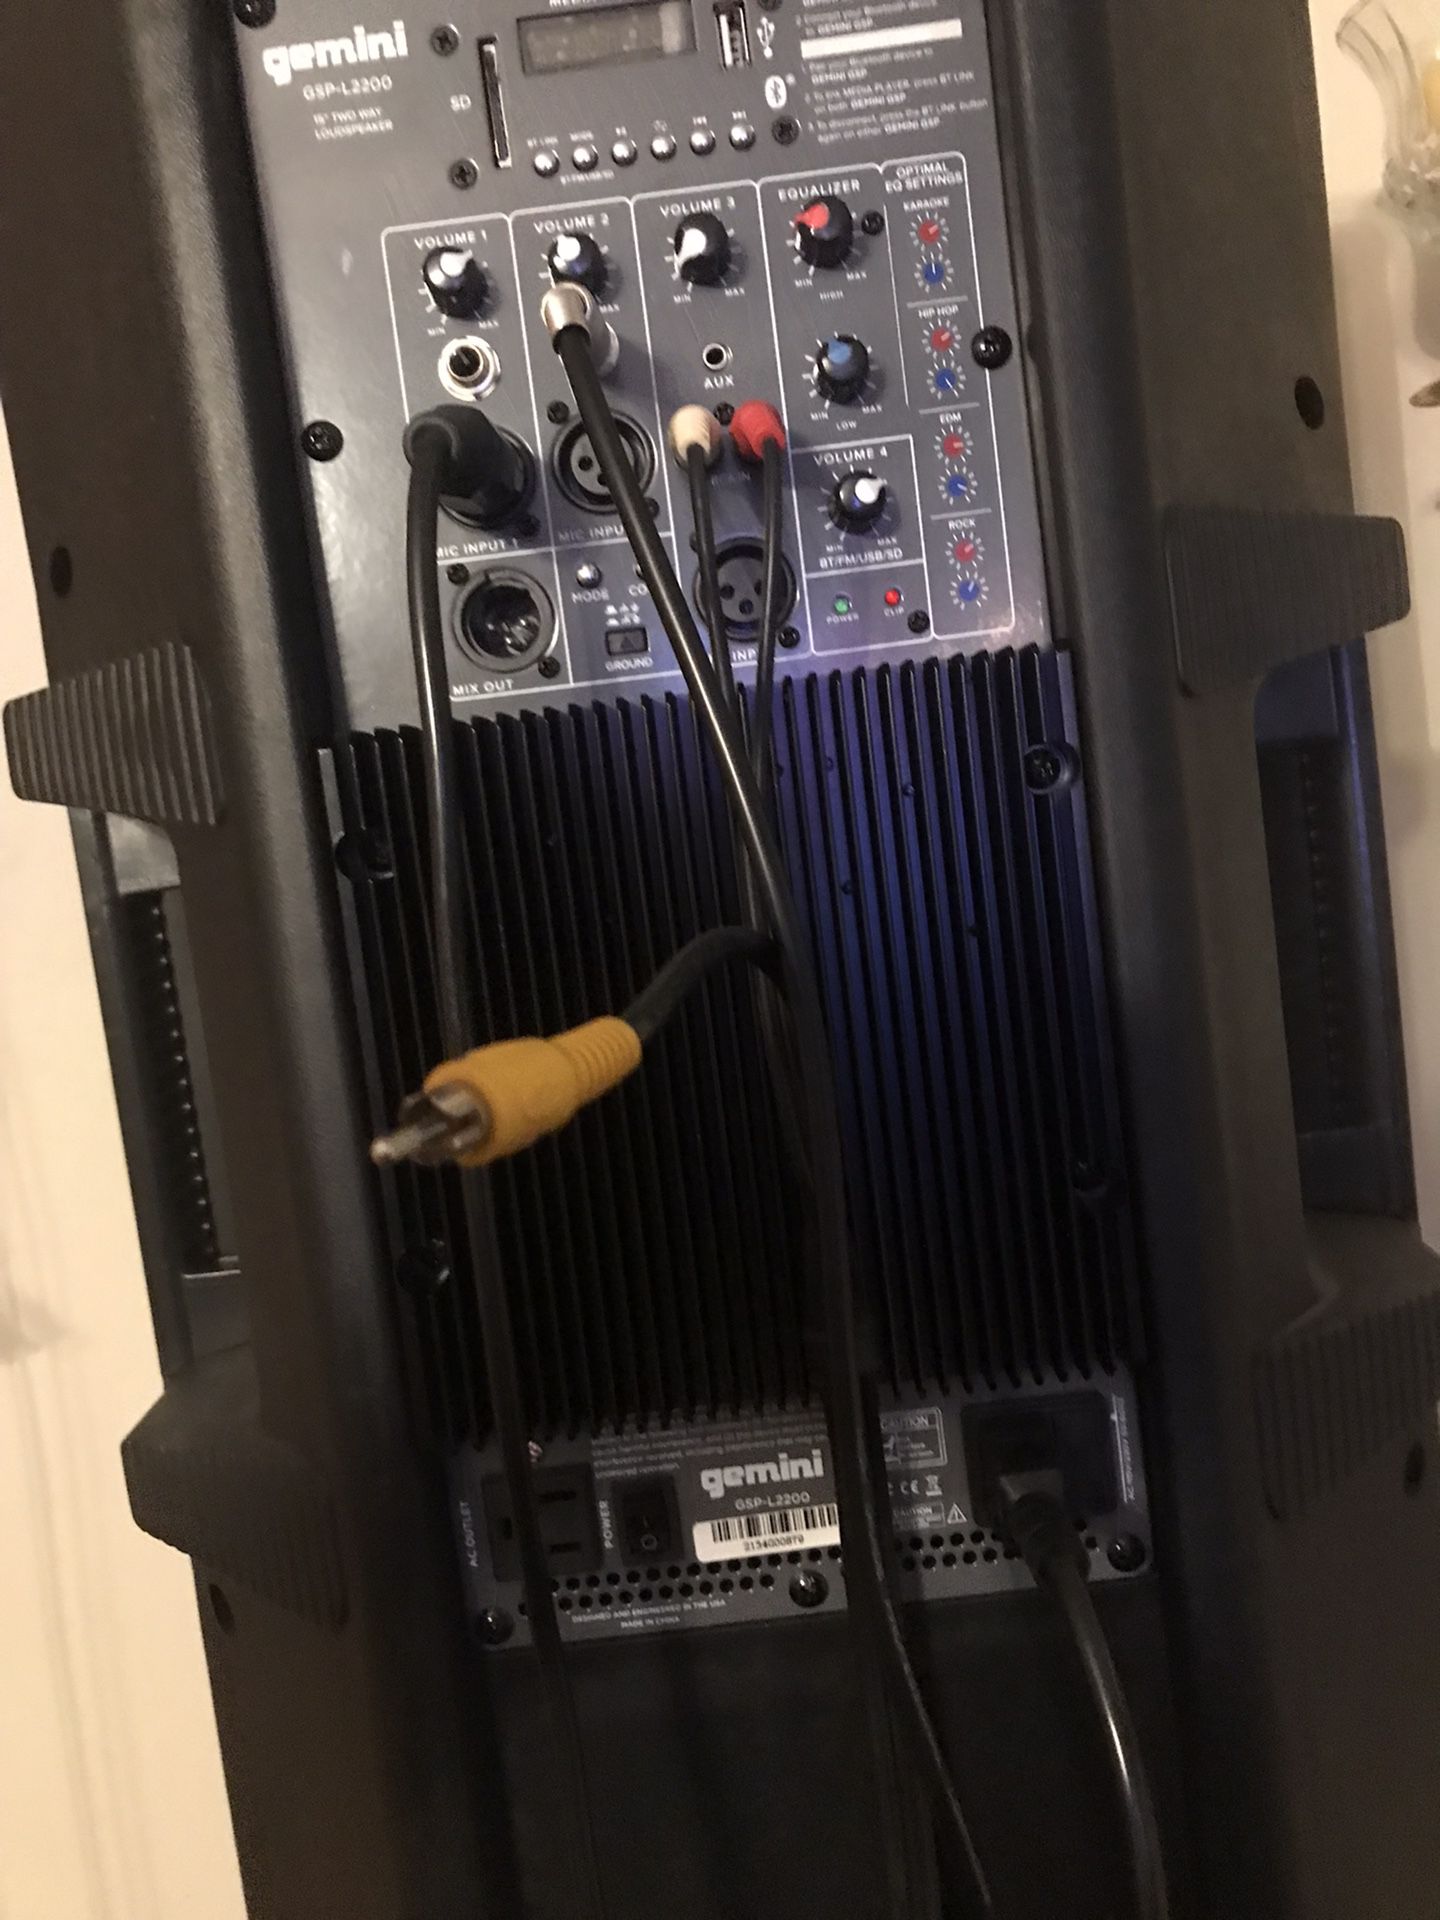 Gemini Stereo System With Karaoke 2500 Watts